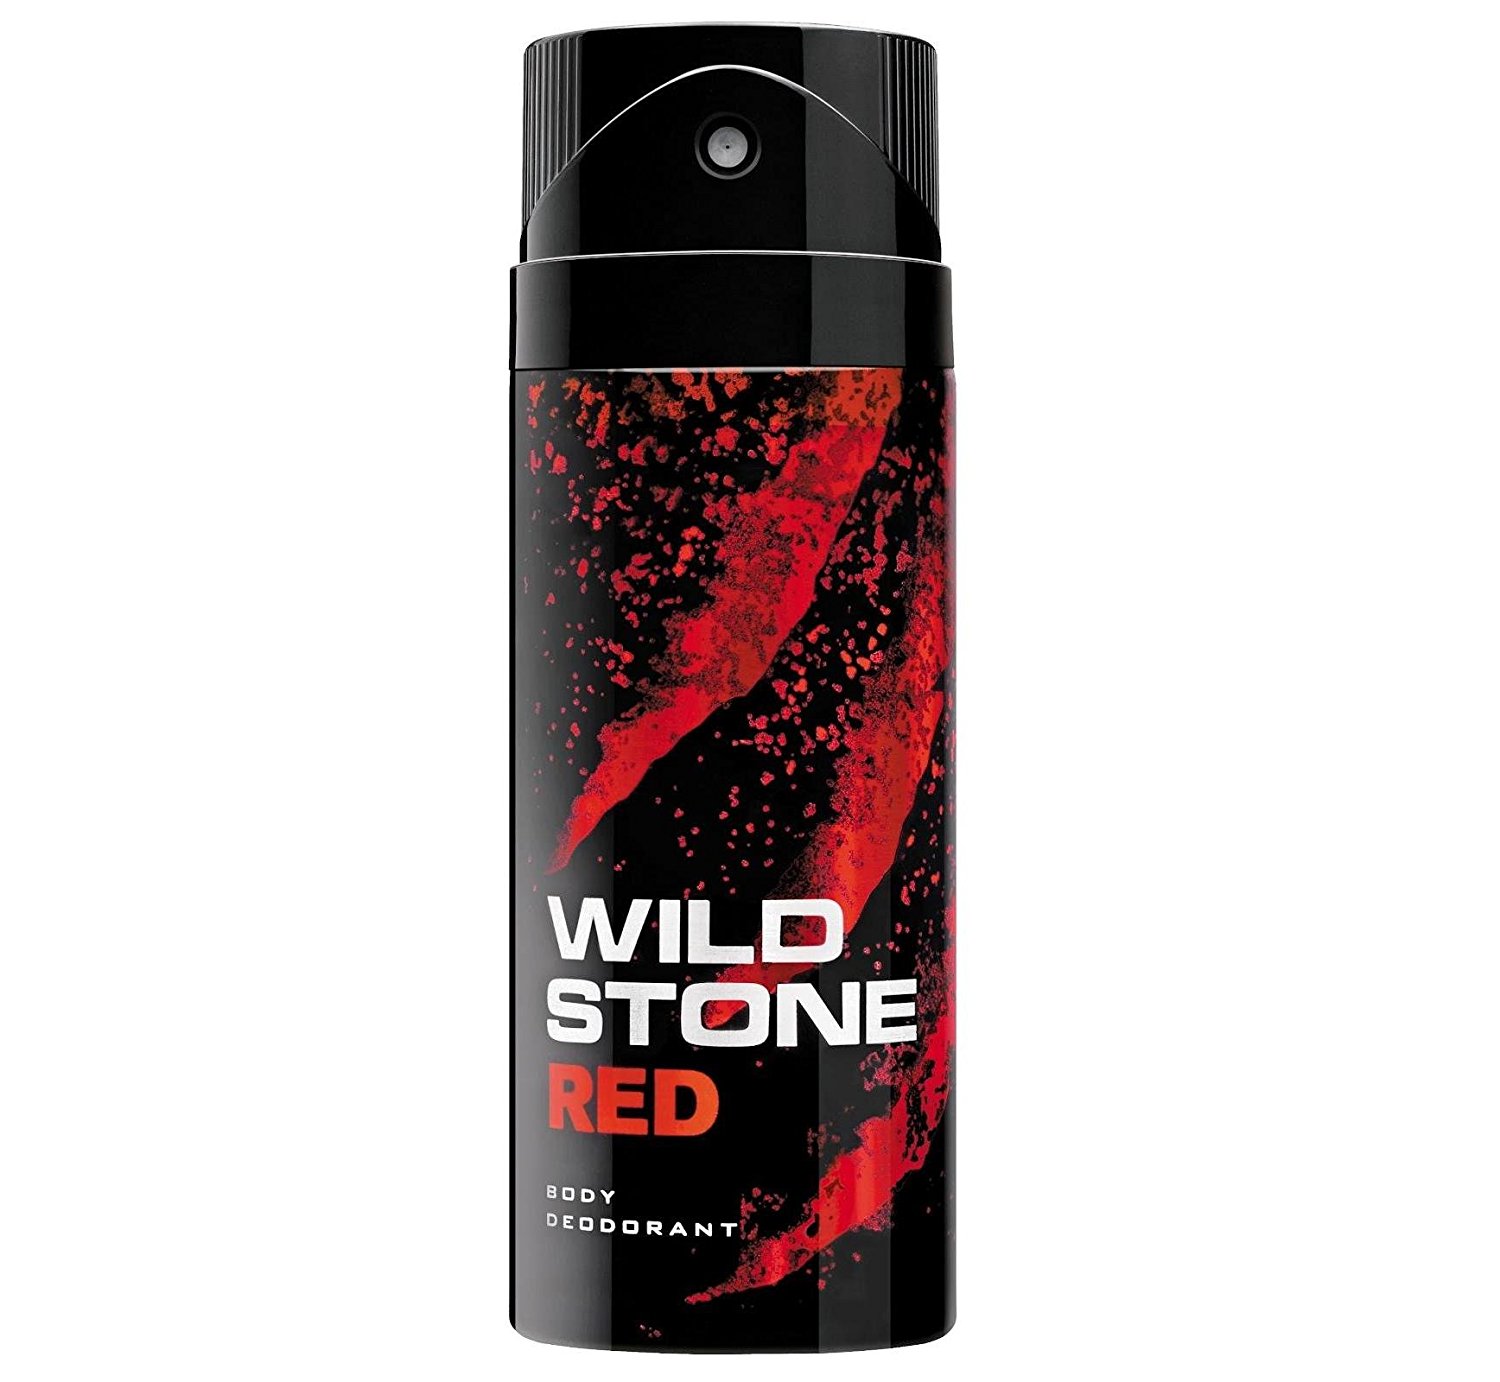 Wild_Stone_red